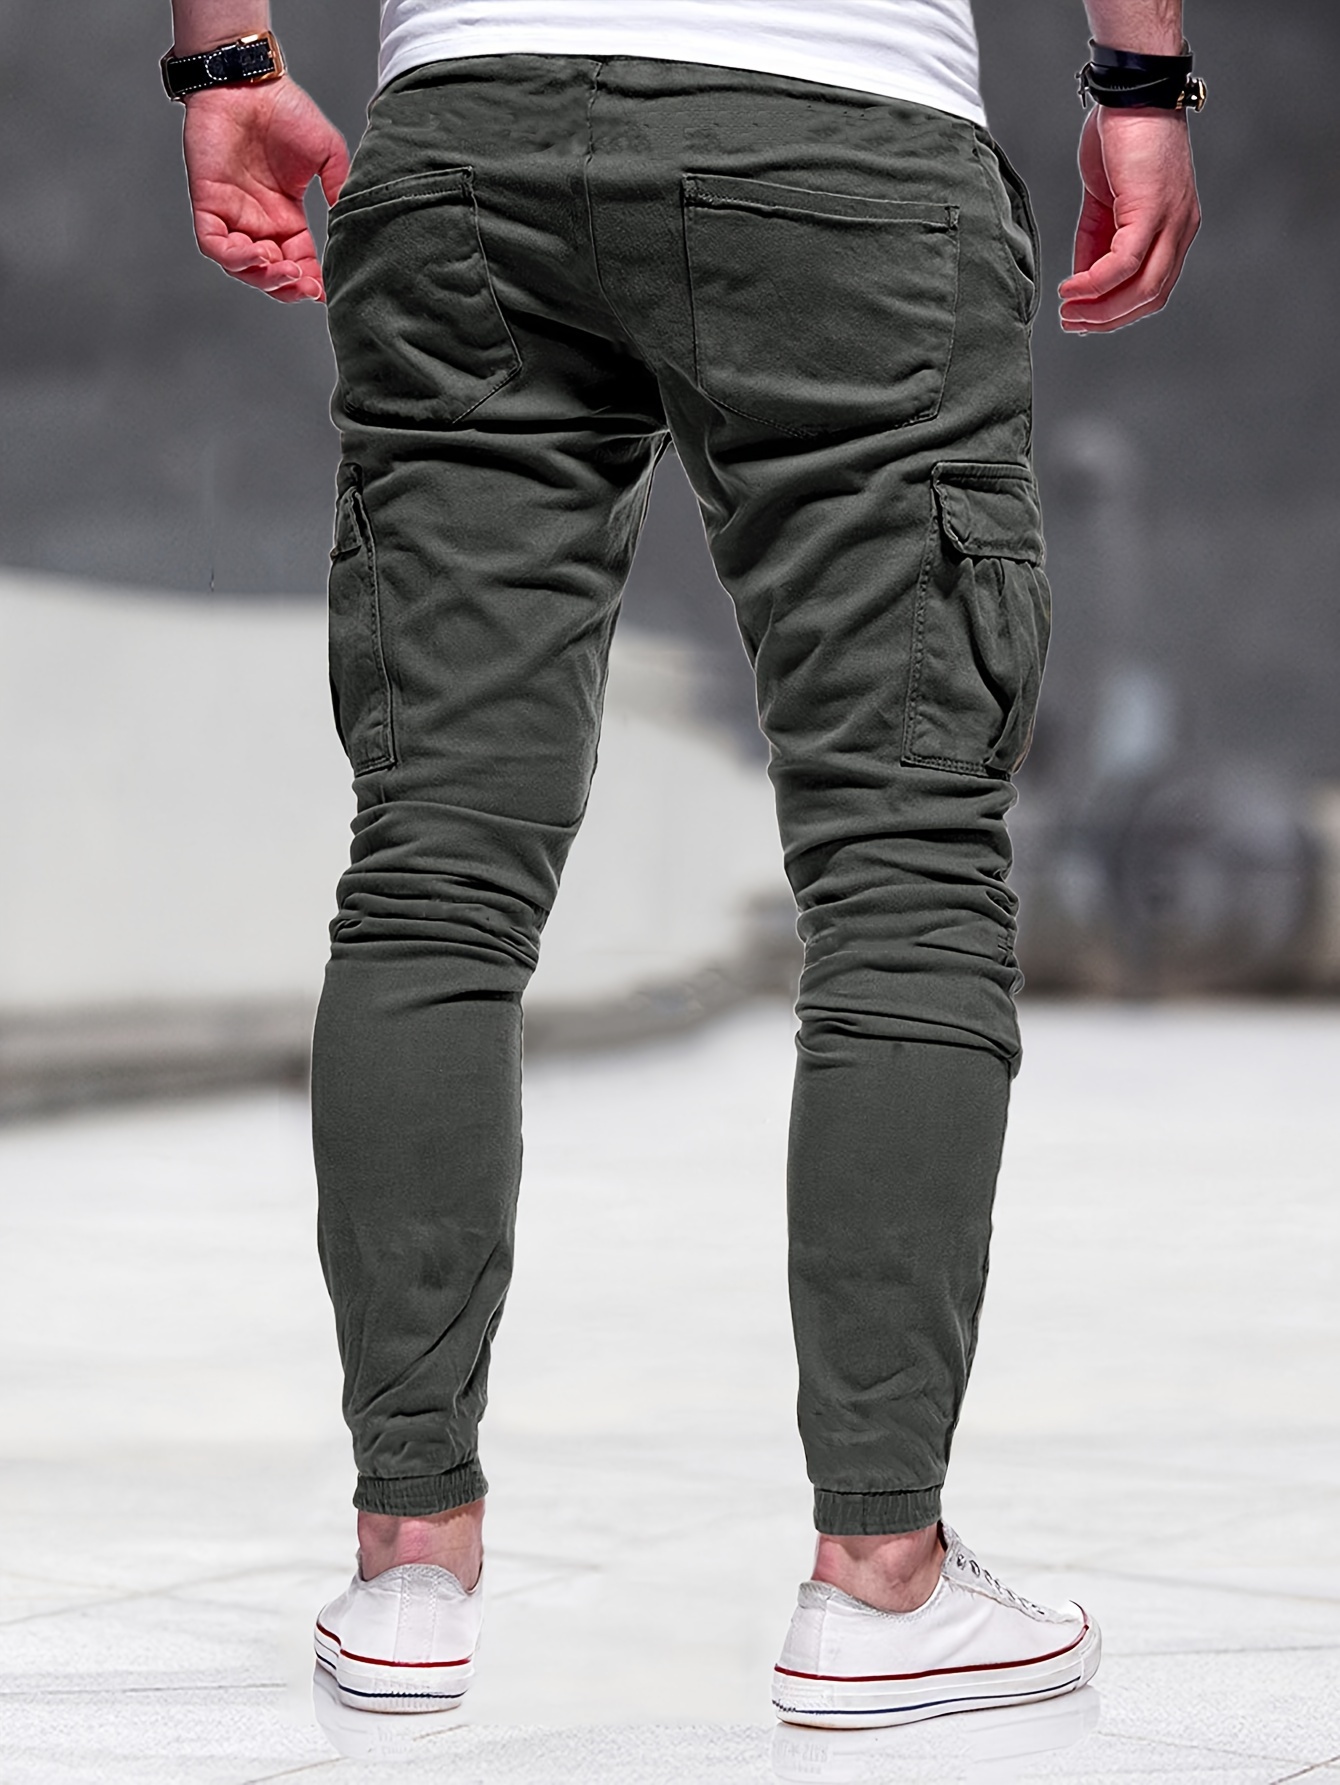 Cargo Pants - Charcoal gray - Men